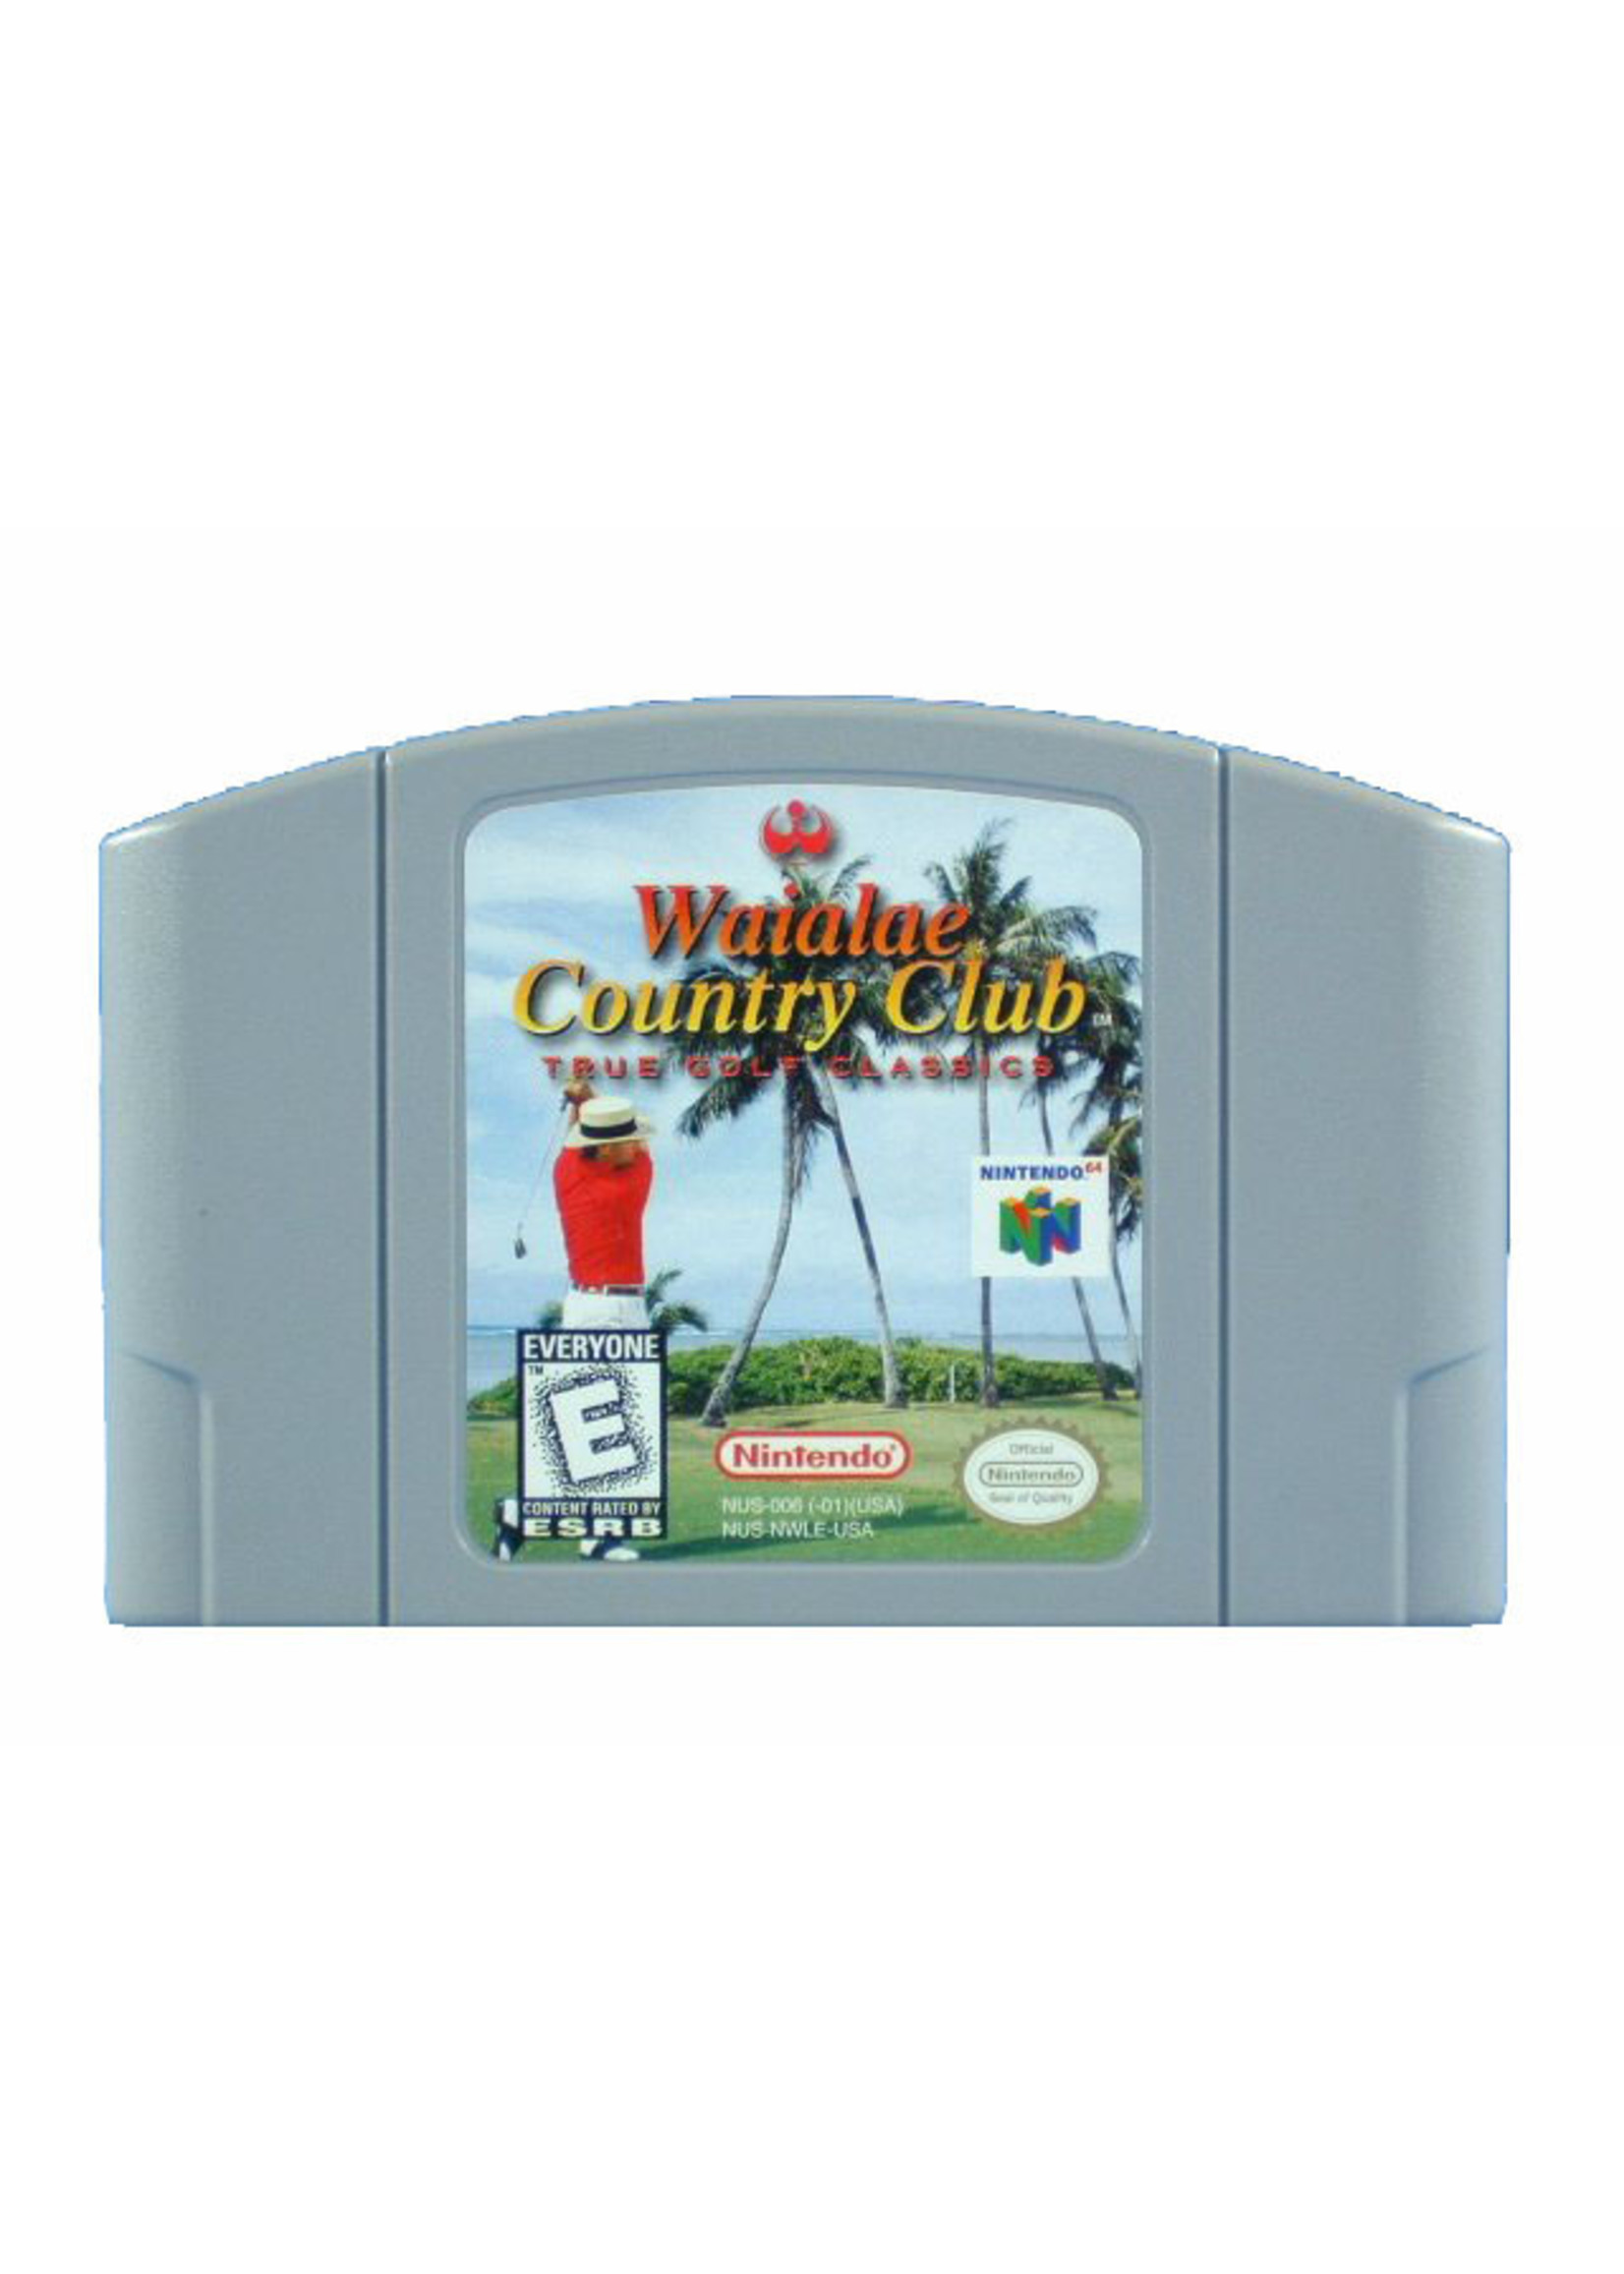 Nintendo 64 (N64) Waialae Country Club